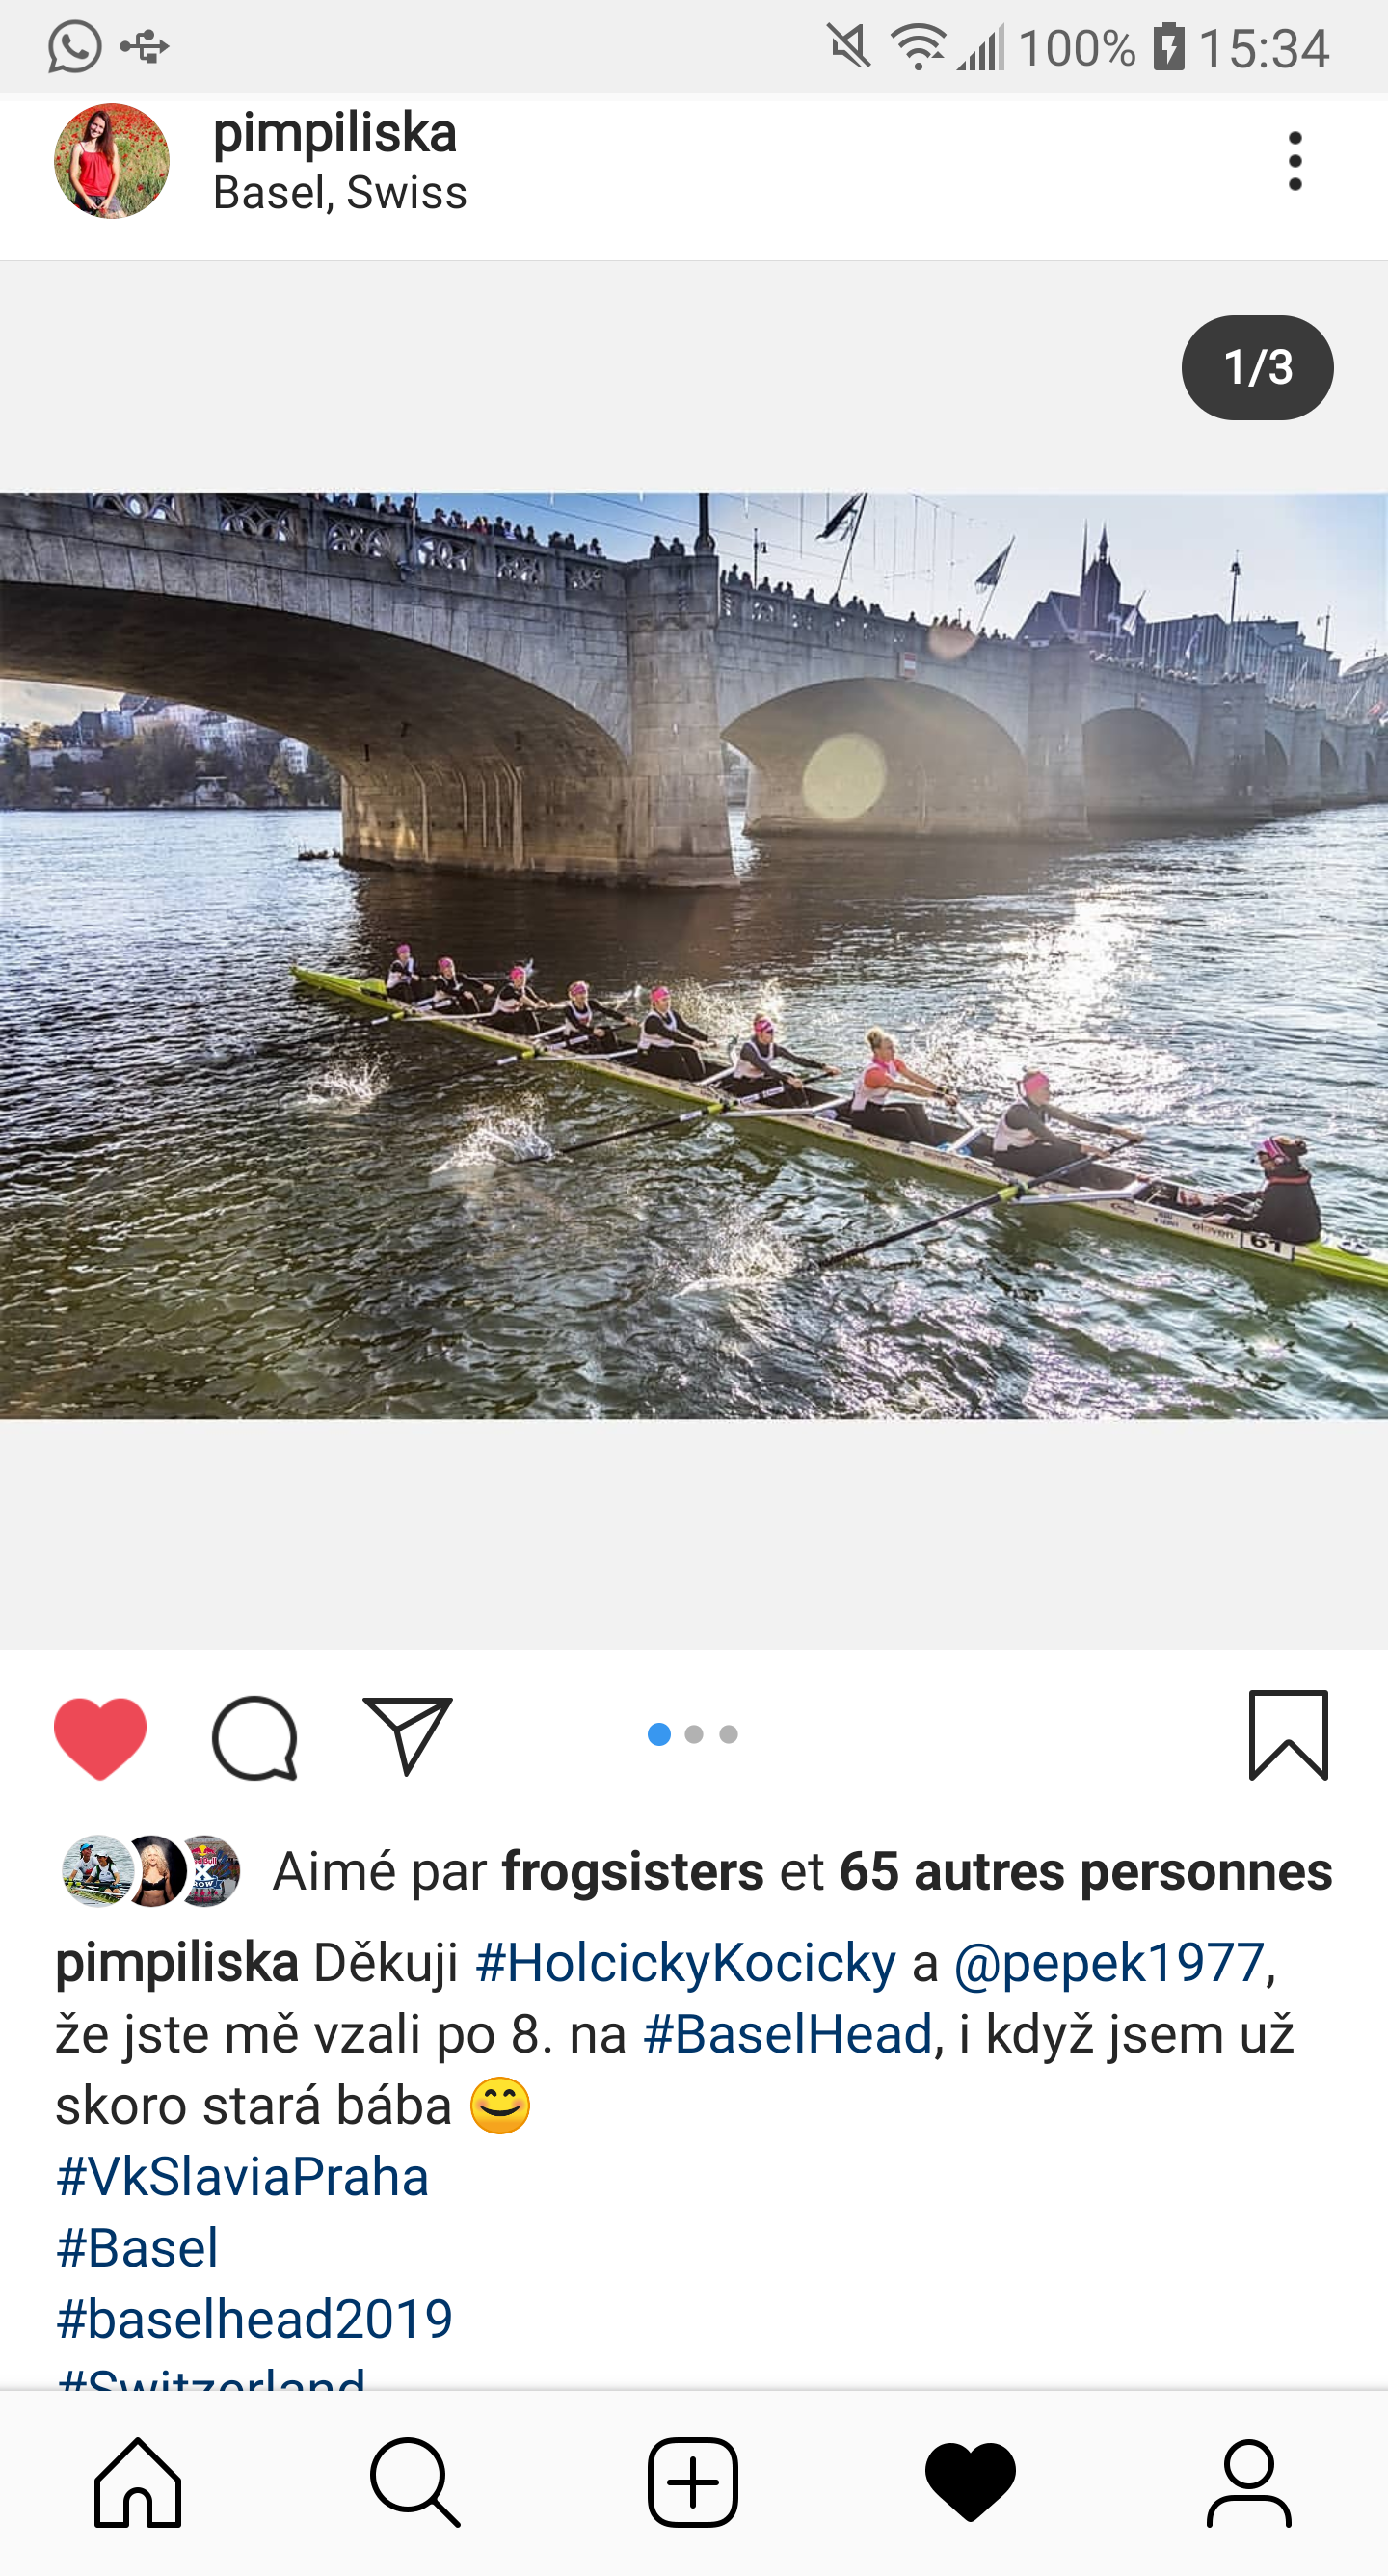 Czech female rowers